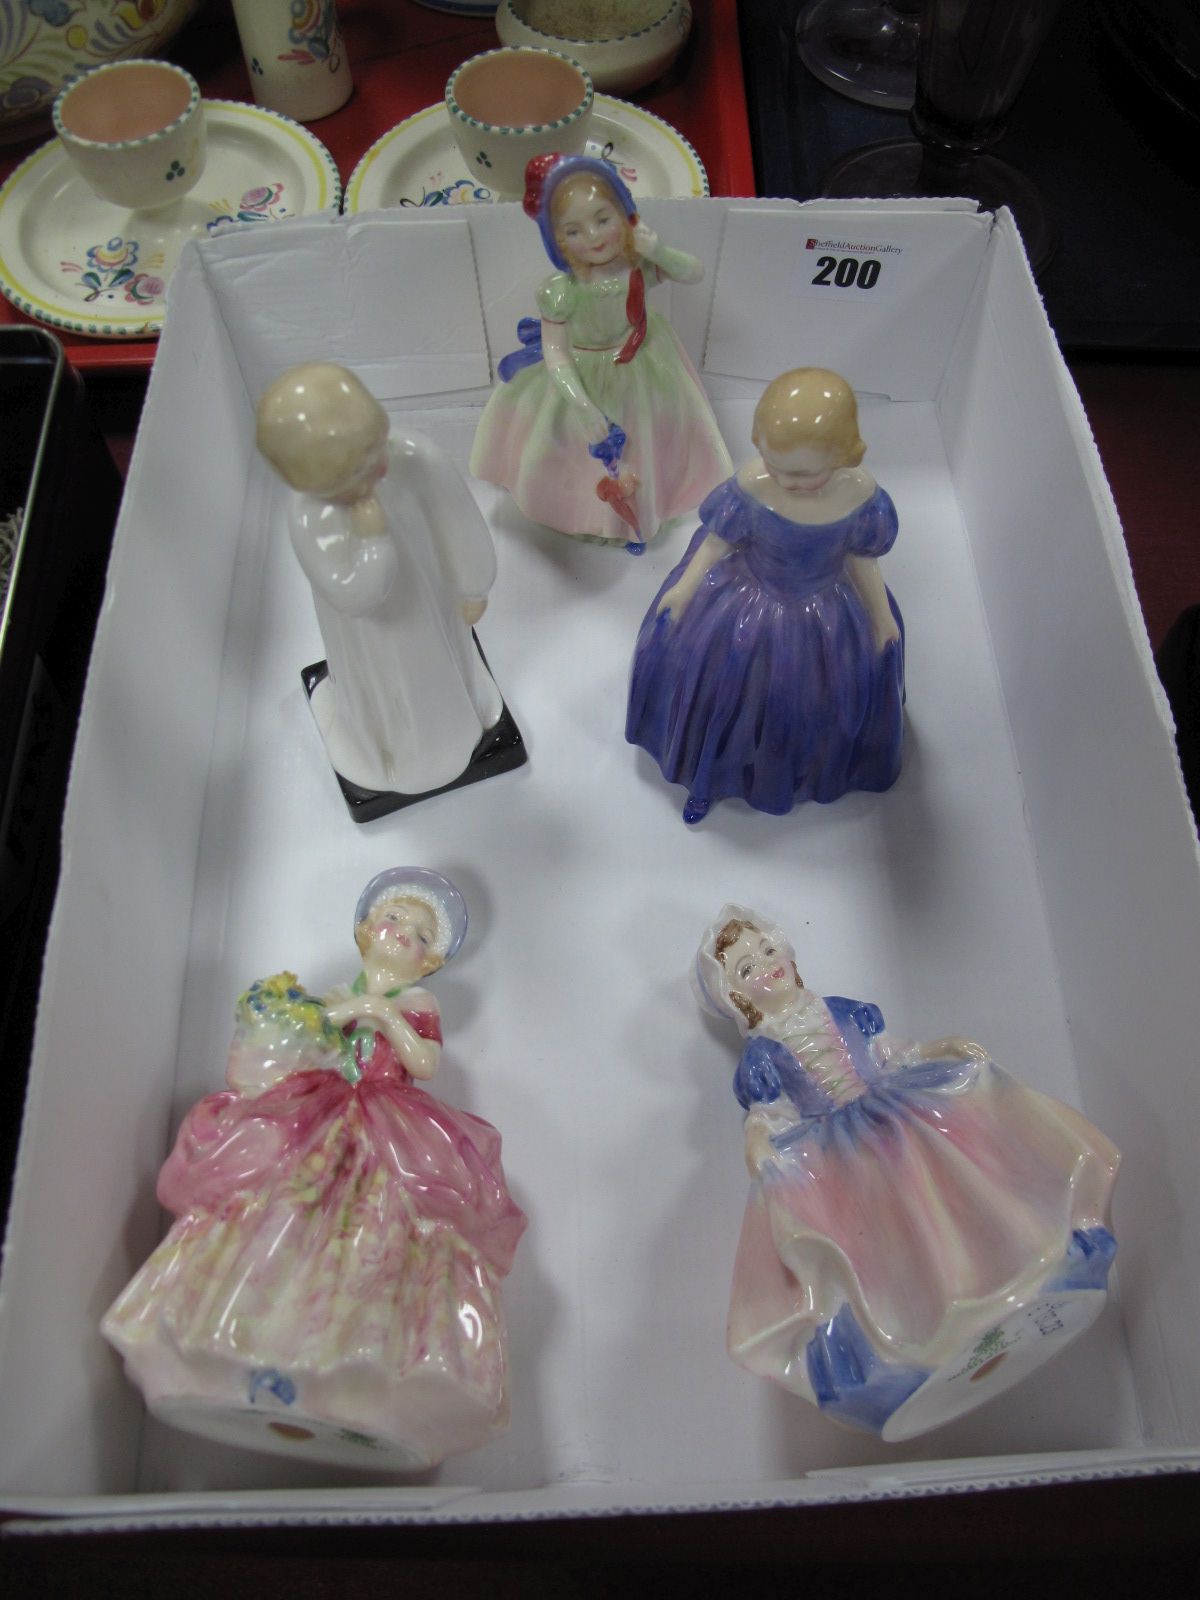 Five Royal Doulton Figurines, including "Darling" HN1985, "Marie" HN1370, "Babie" HN1679, Cissie